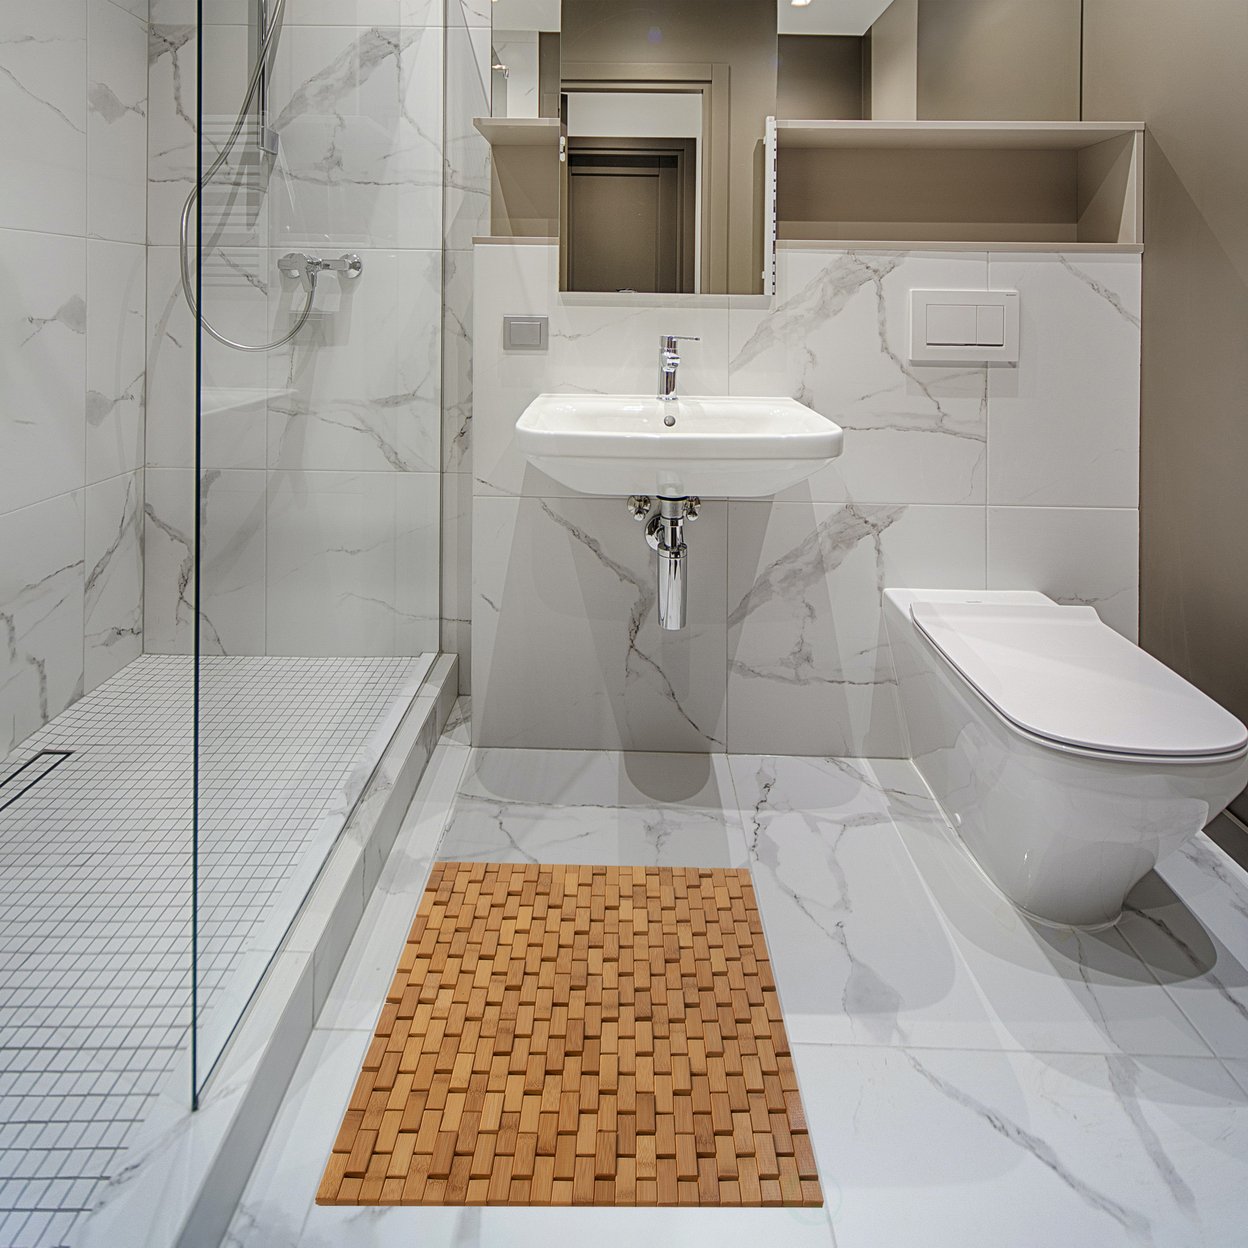 Foldable Bamboo Bath Mat Natural Anti-Slip Rug, Flooring Solution For Stylish Bathroom And Vanity Decor